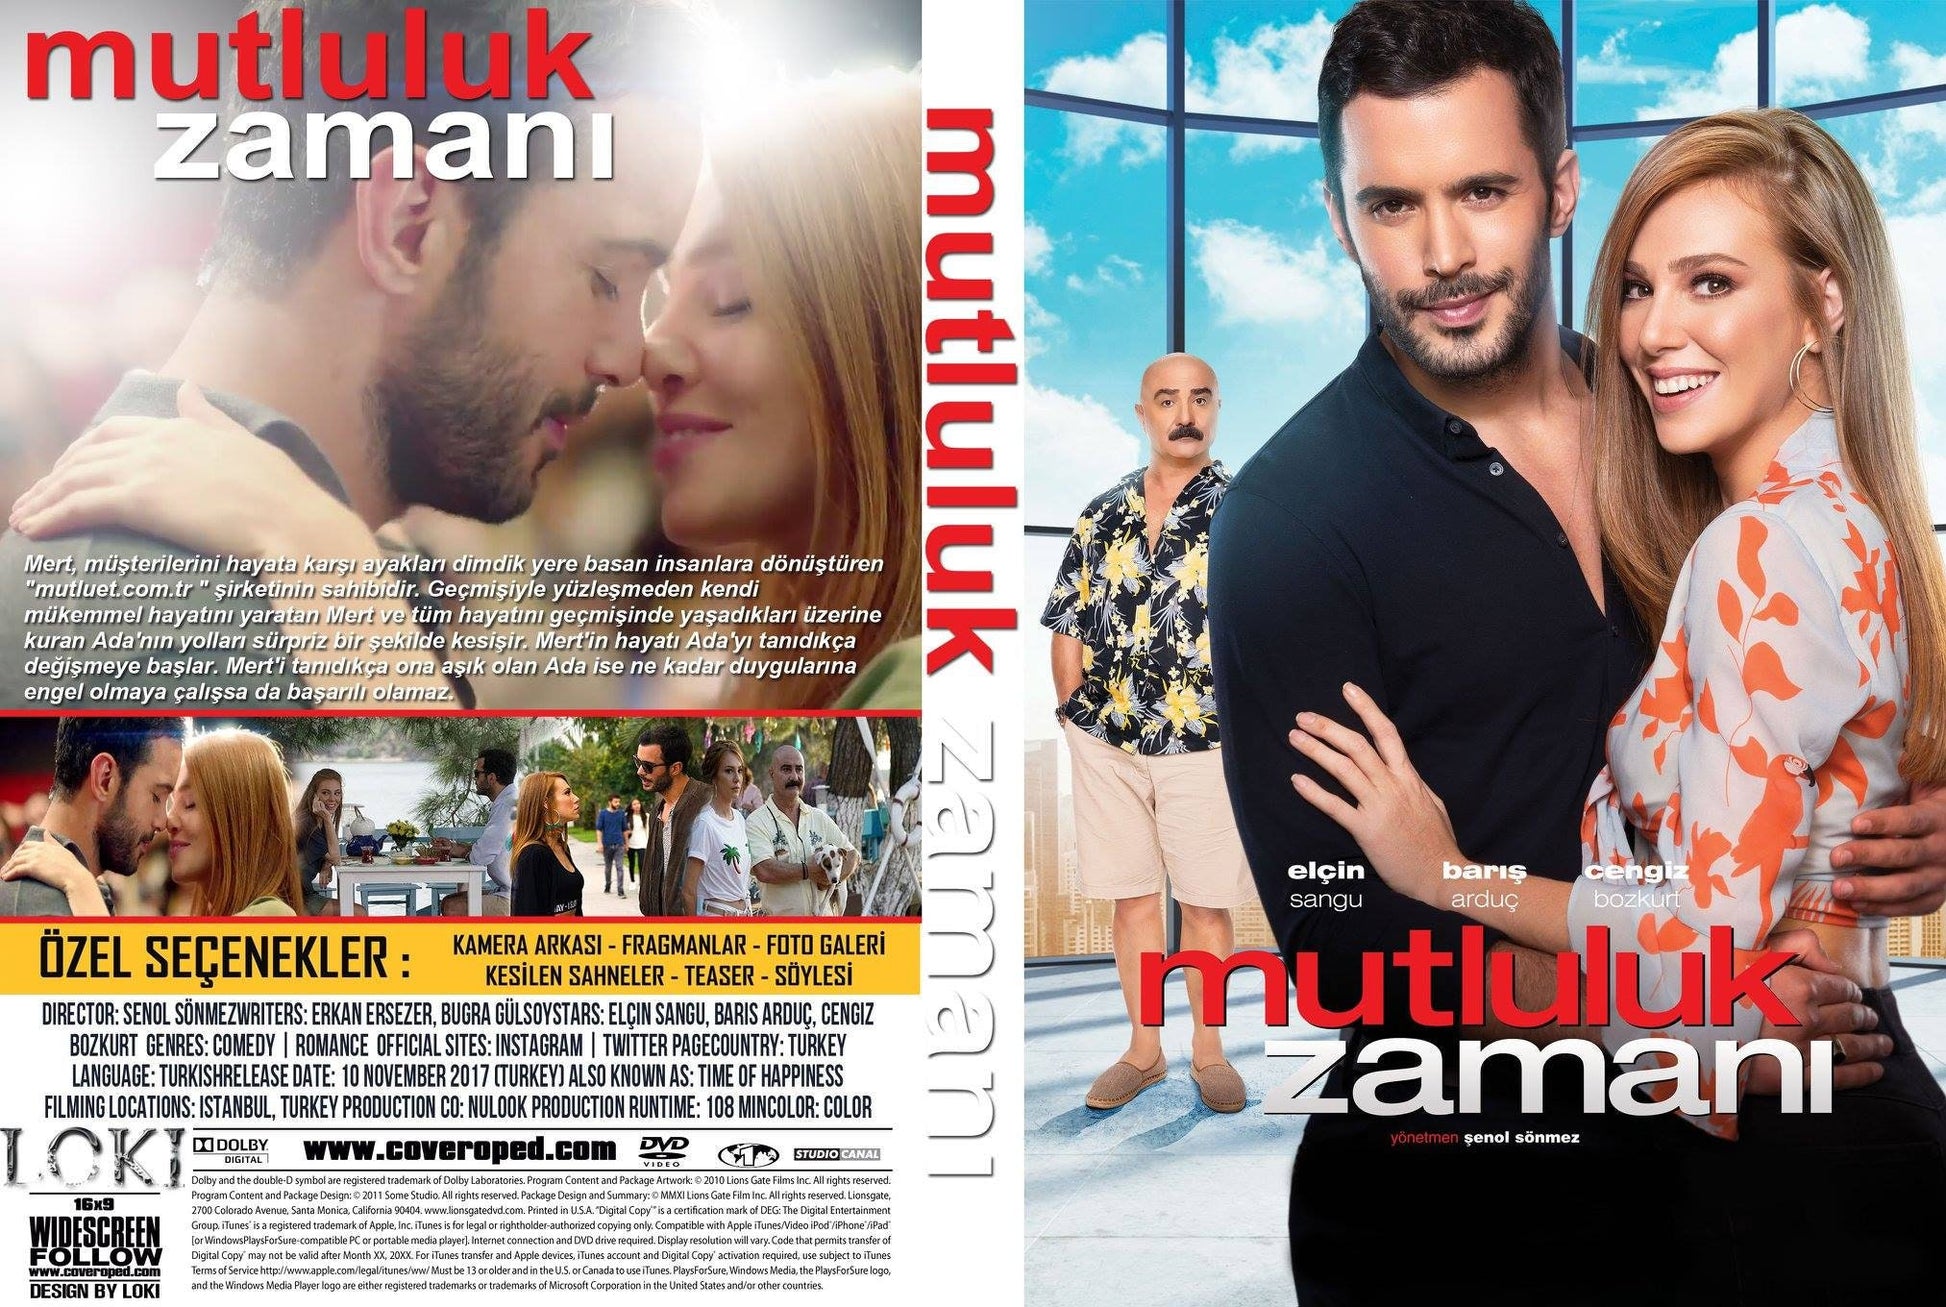 Mutluluk Zamani English Subtitles Time of Hapiness | Turkish Romantic Comedy Movie English Deutsch Italiano Espanol Subtitles